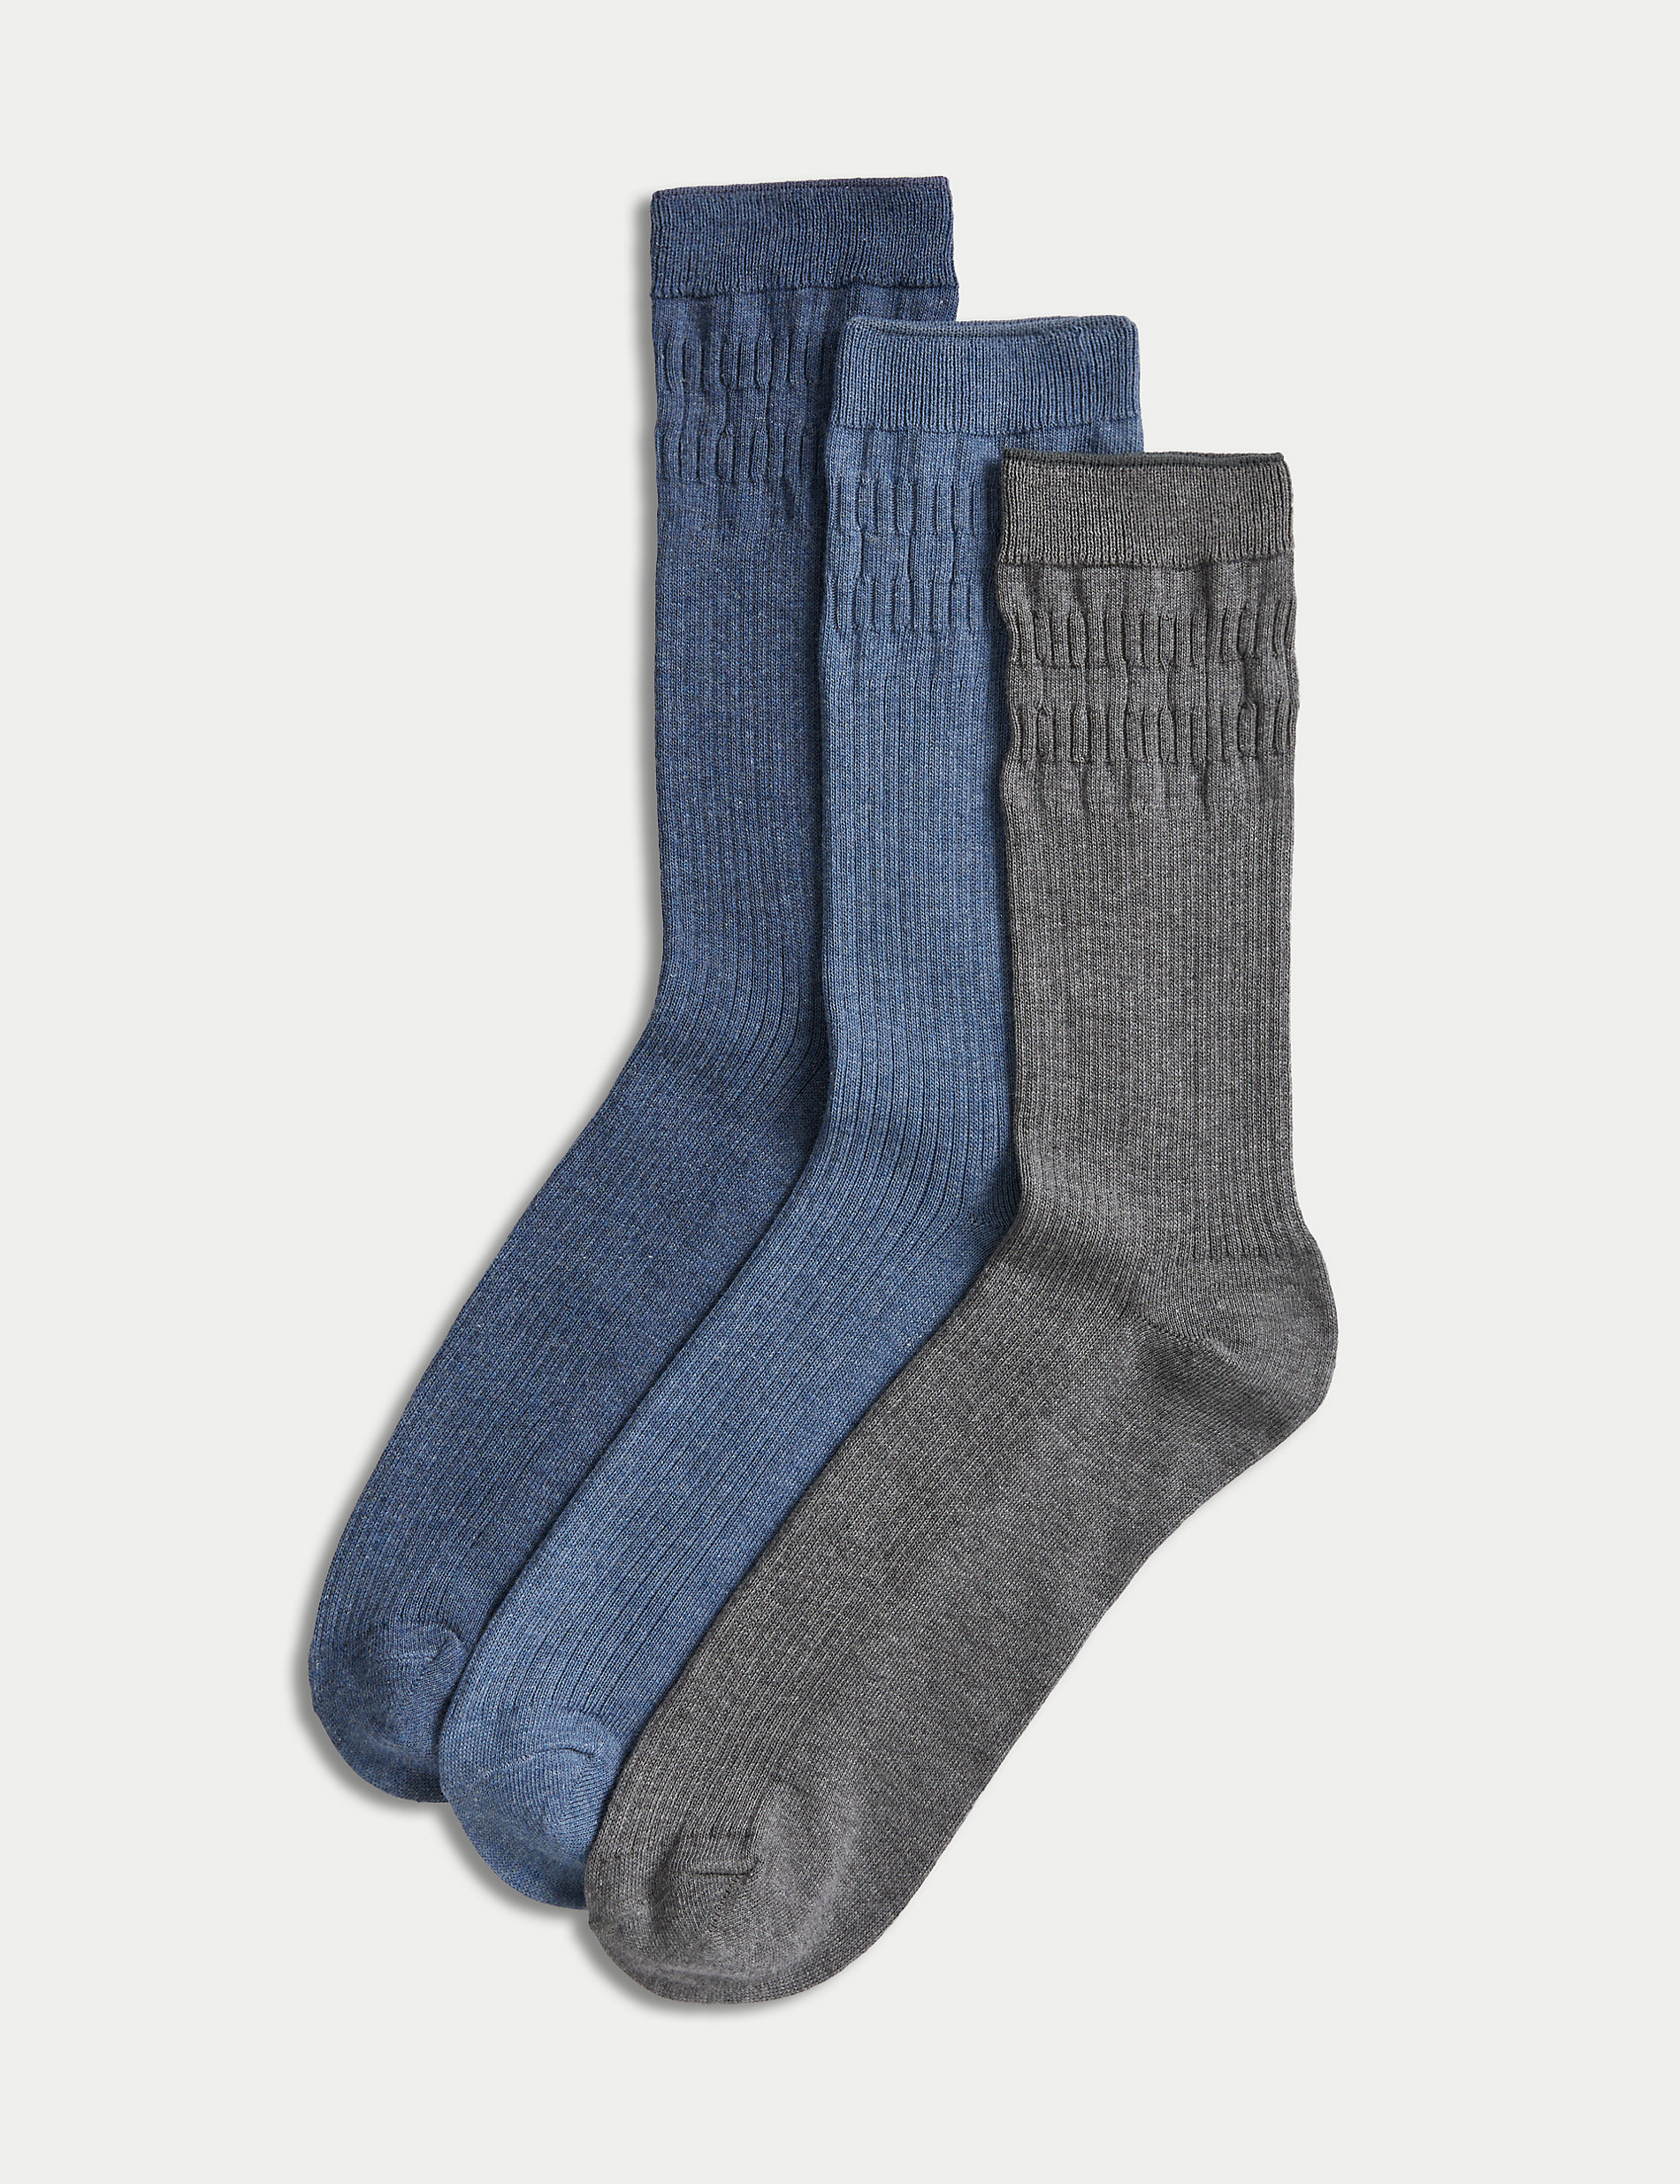 3 пары носков Gentle Grip Cool & Fresh Marks & Spencer, синий микс